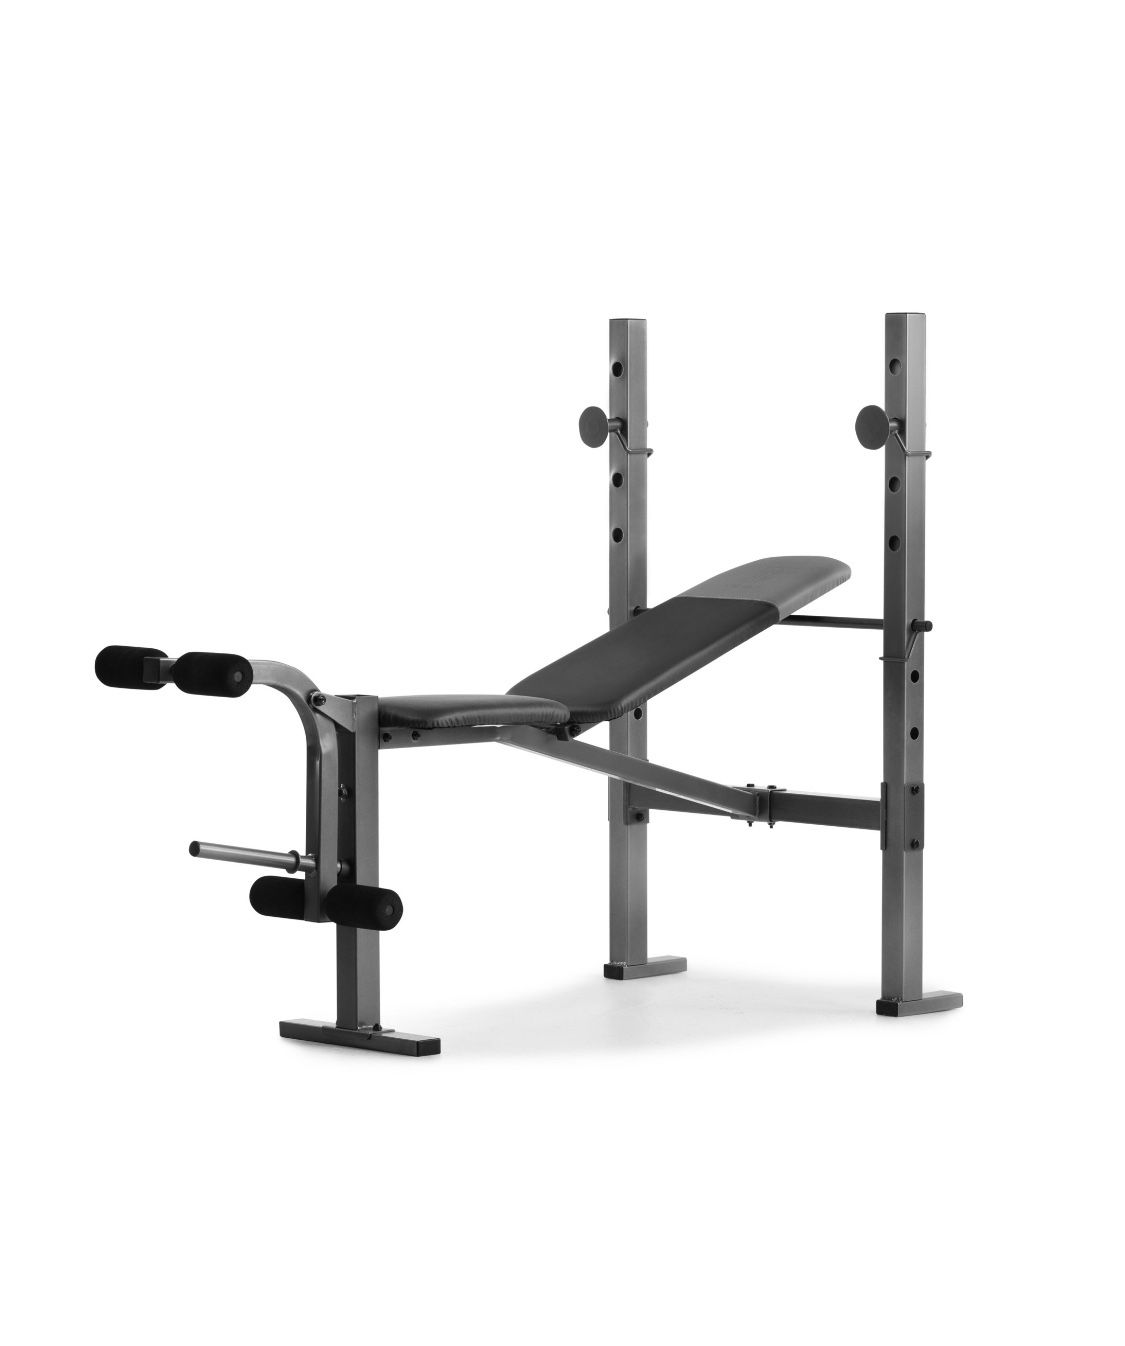 Weider XR 6.1 Multi-Position Weight Bench with Leg Developer